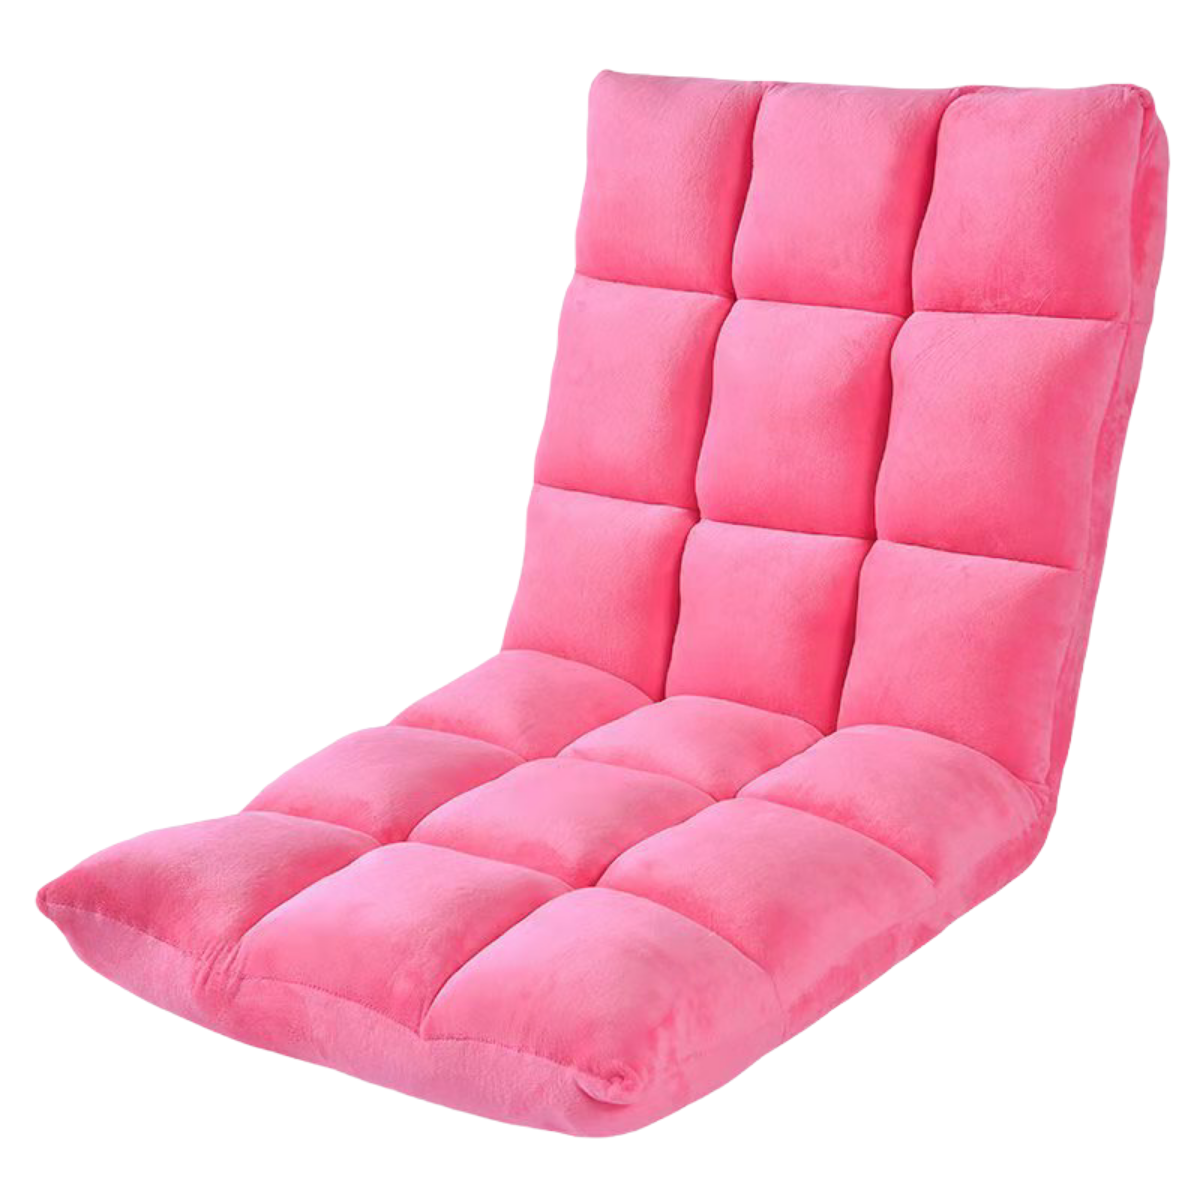 Cat Paw Cushion Lazy Sofa Floor Chair Cushion Seat Pillow Seat Cushion Home Office